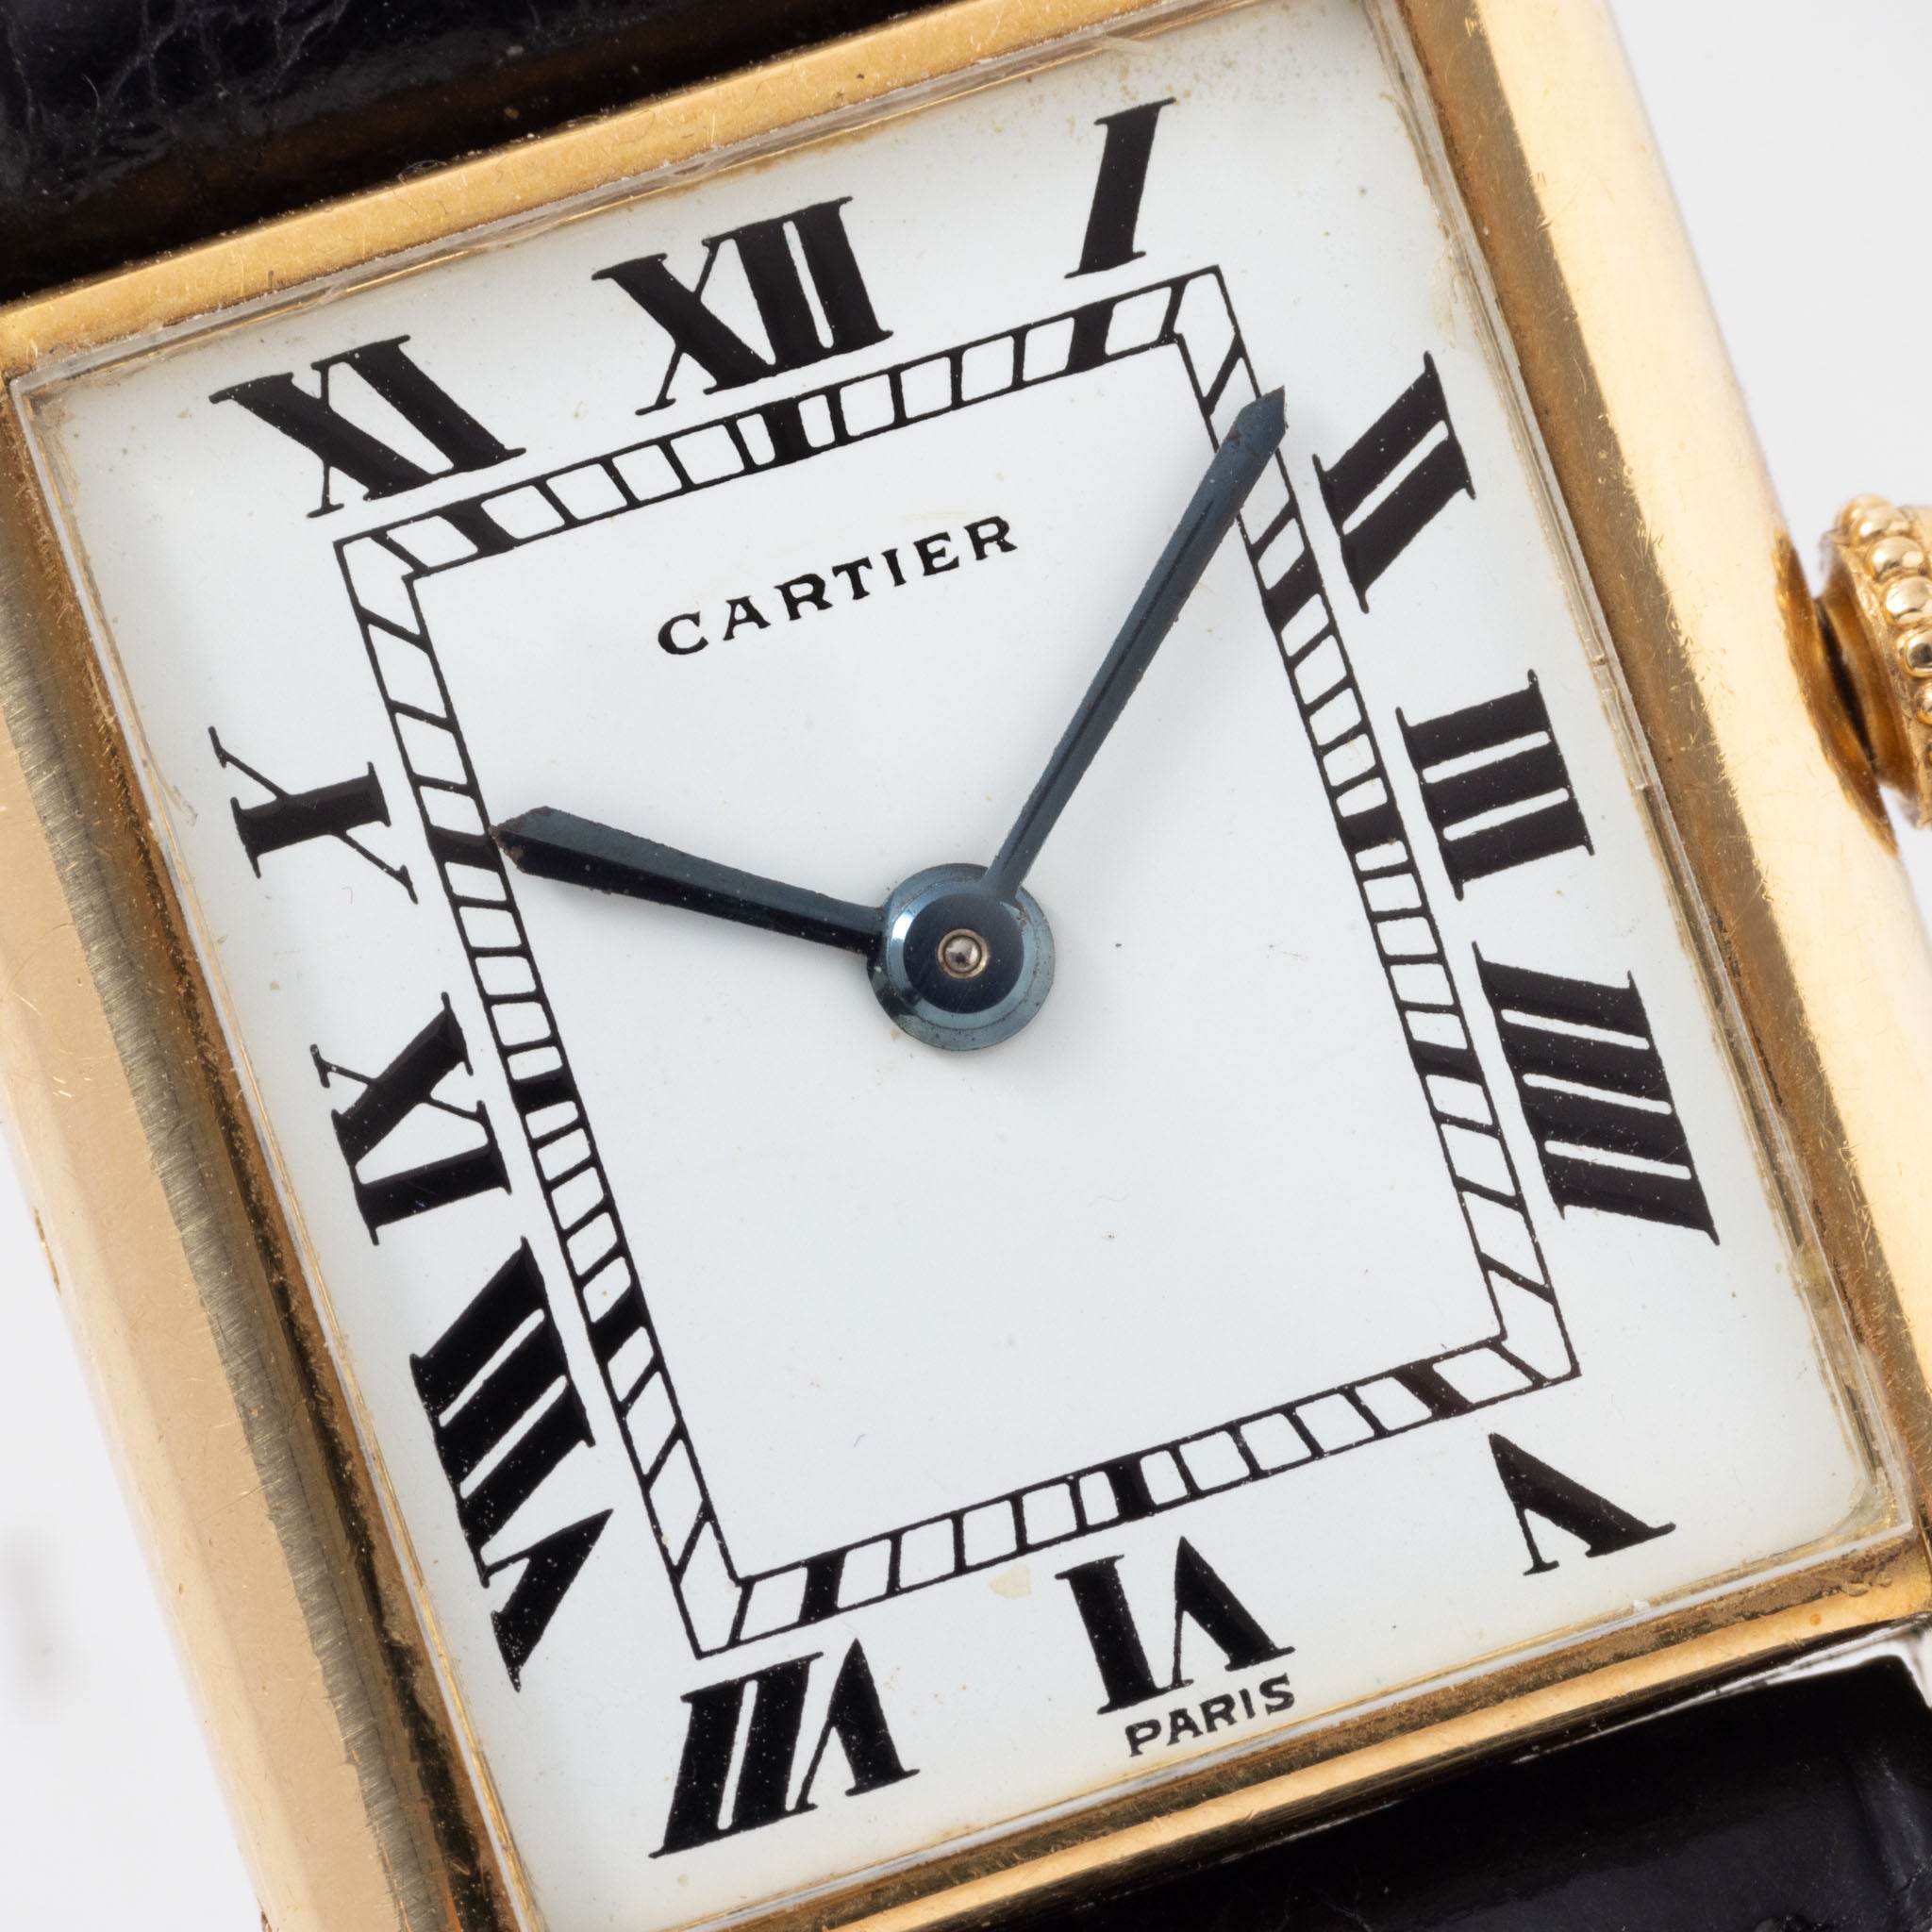 Cartier Tank Louis 18kt gold "Paris dial" Jaeger Movement 1960s